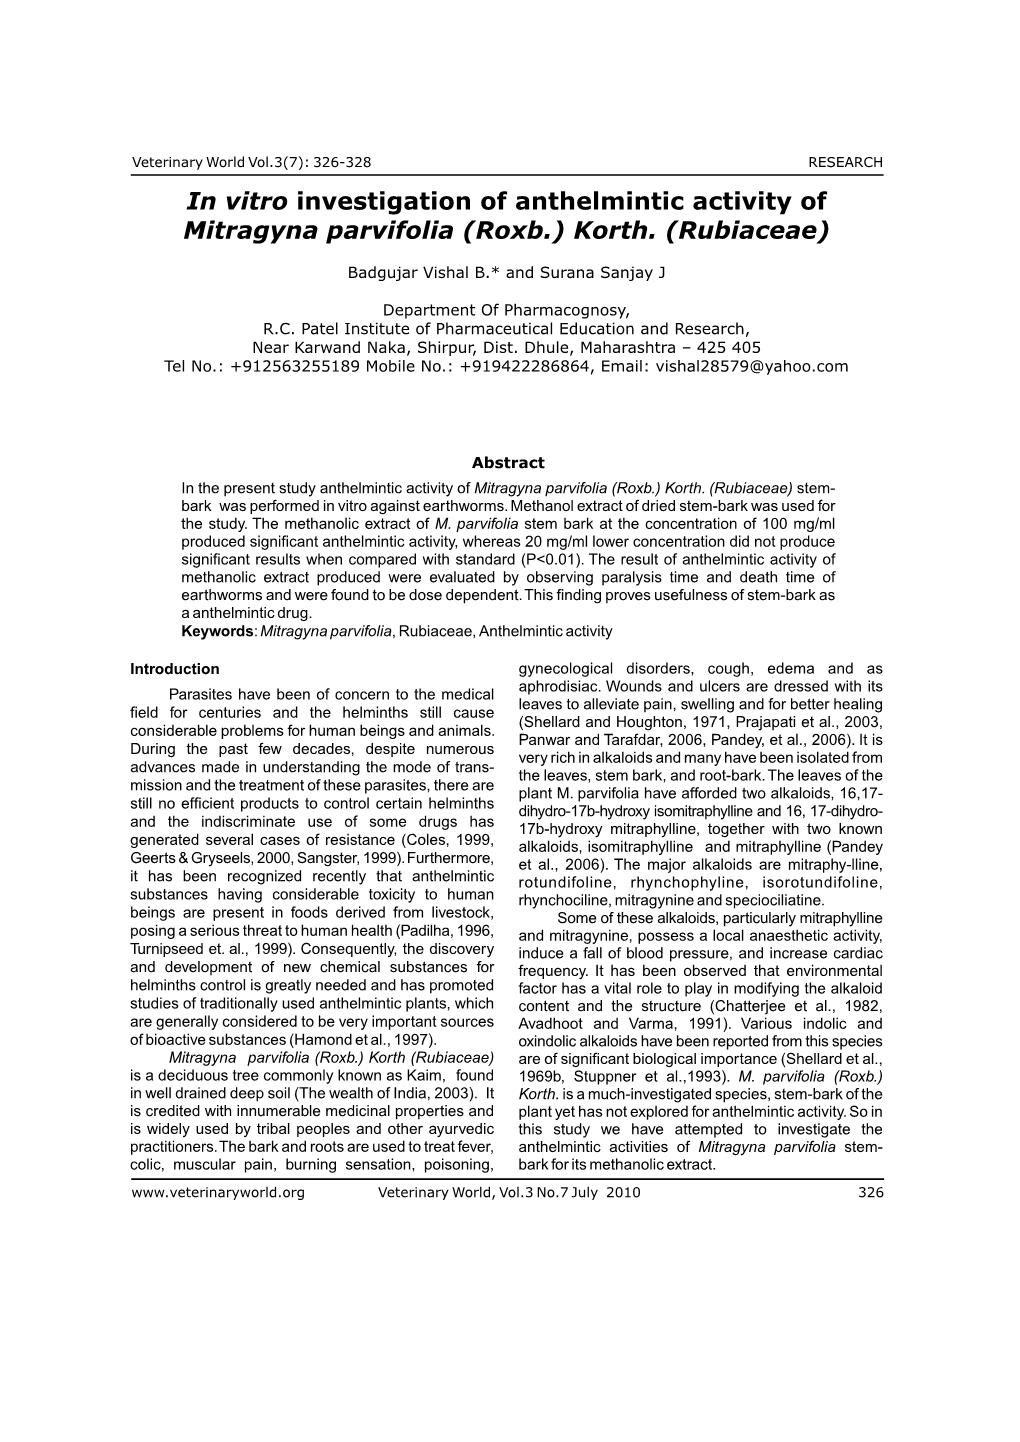 In Vitro Investigation of Anthelmintic Activity of Mitragyna Parvifolia (Roxb.) Korth